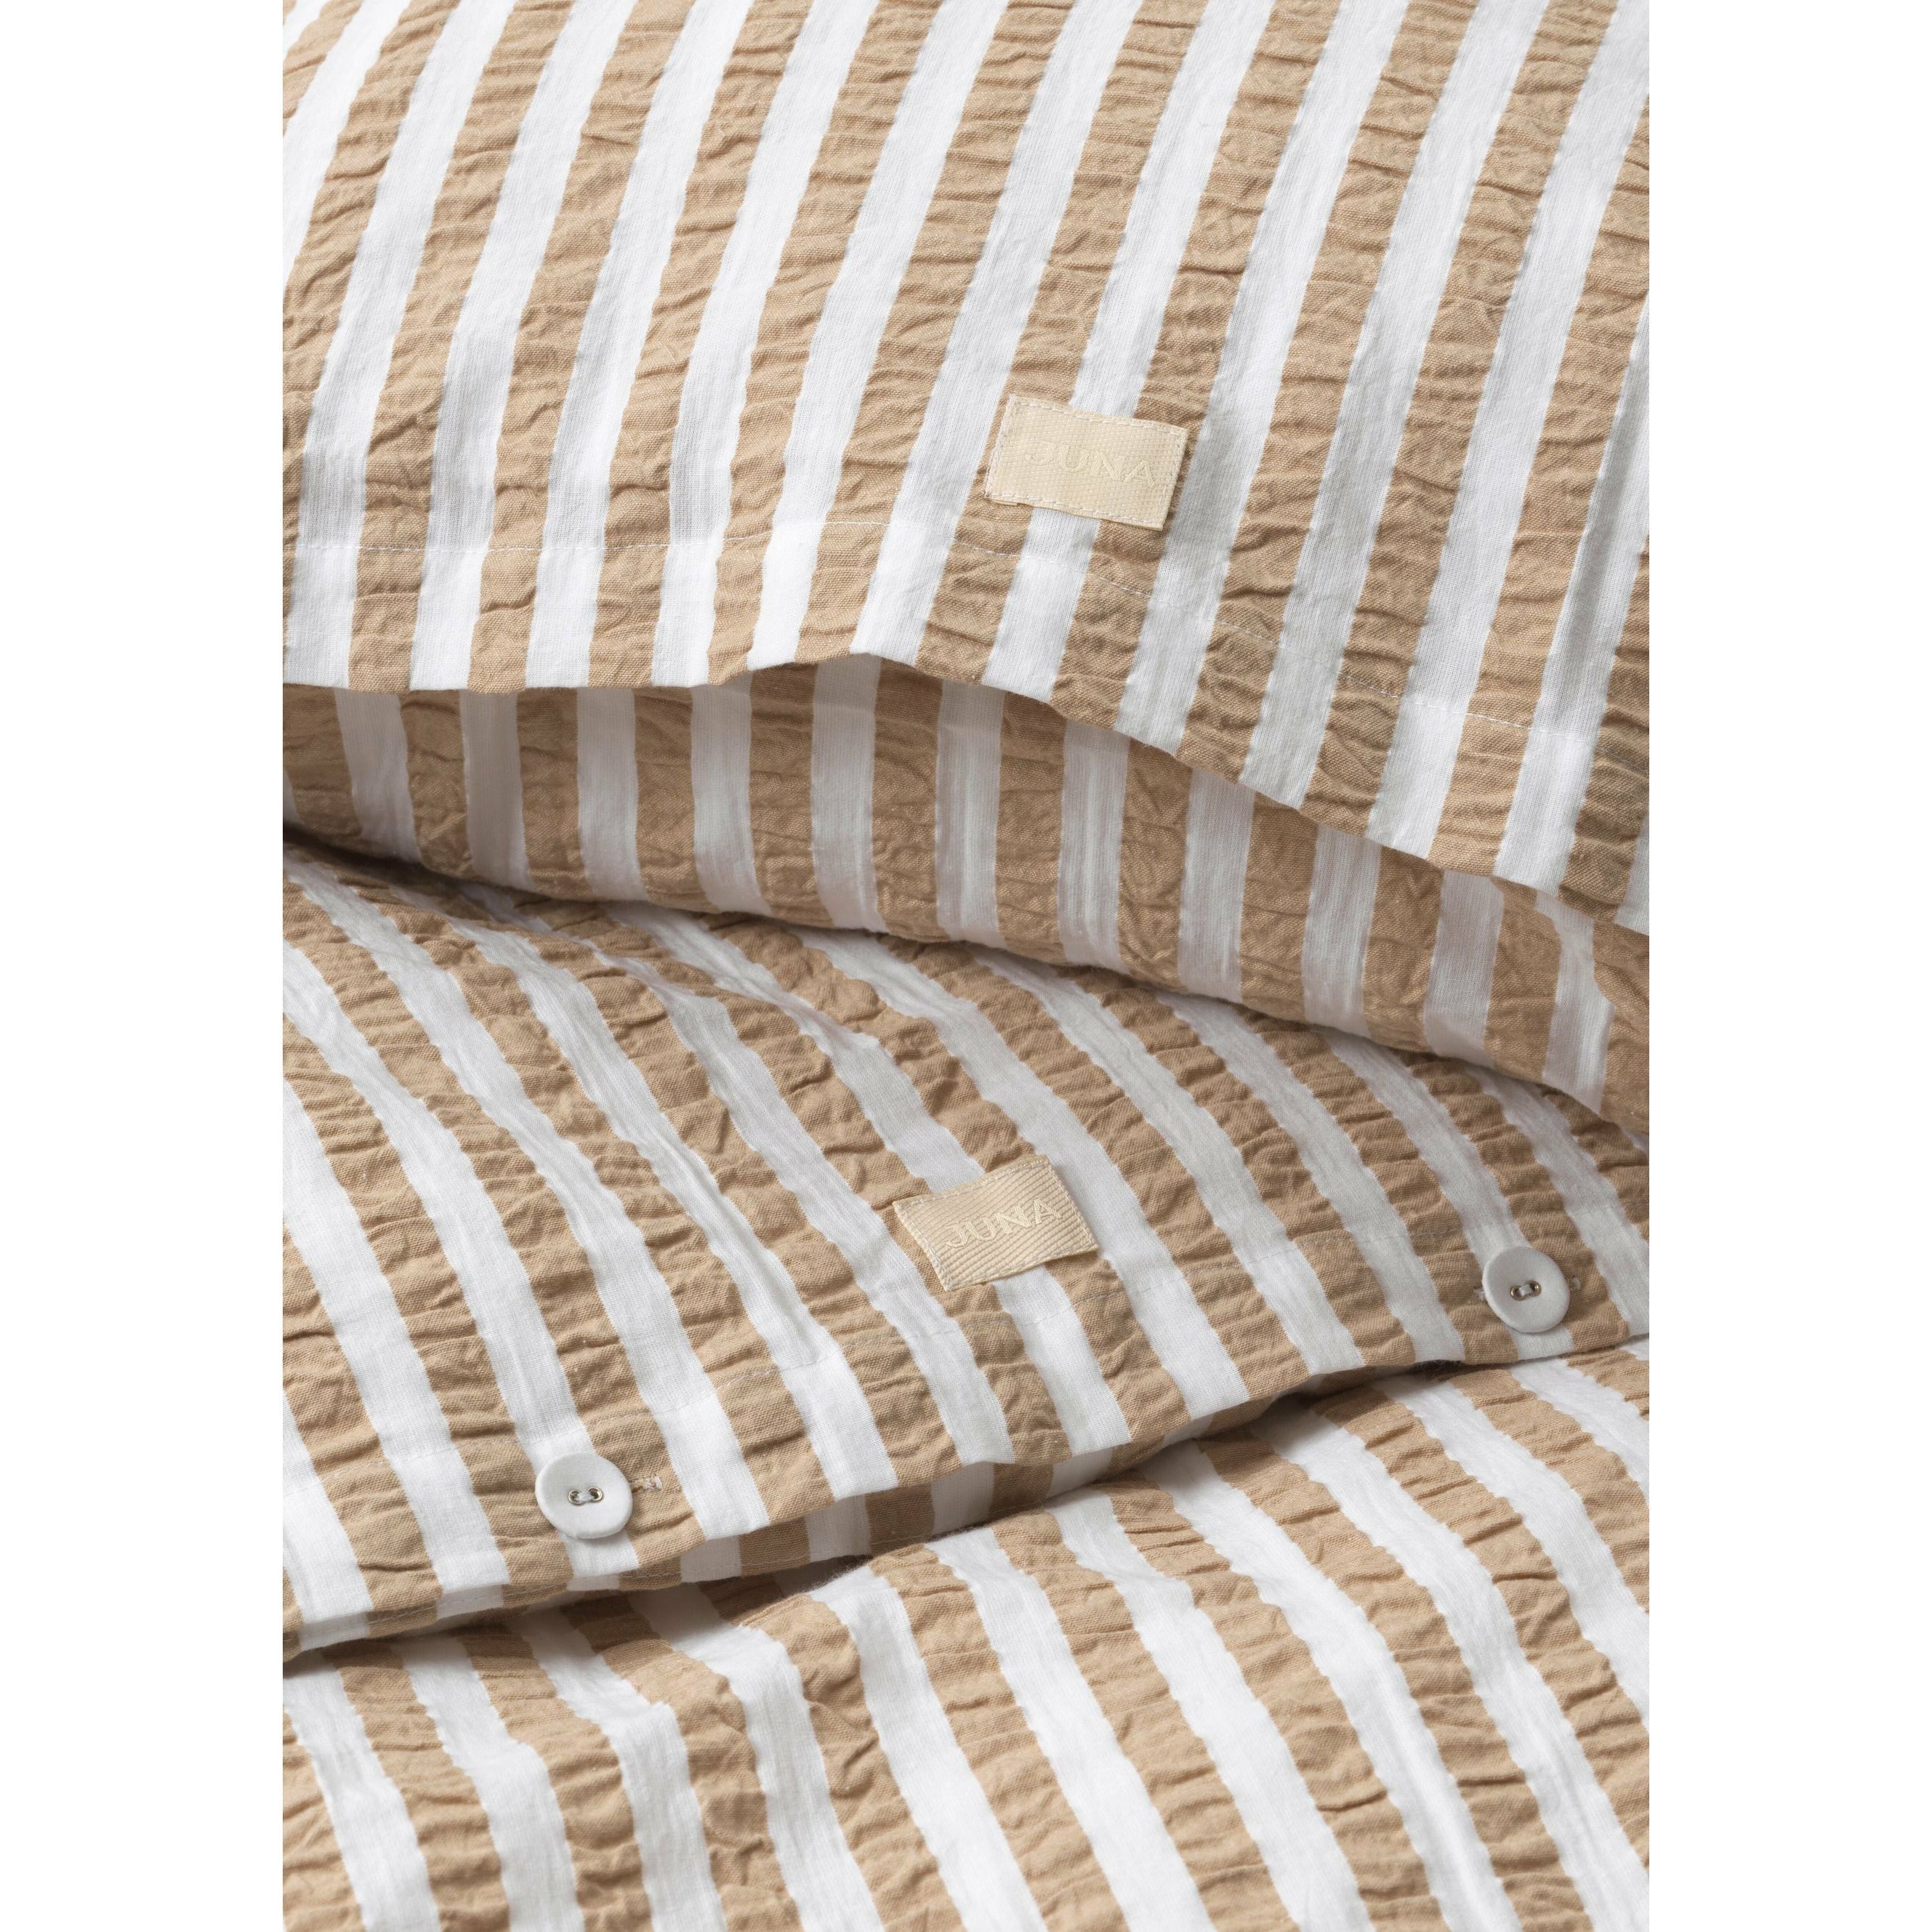 Juna Bæk & Bølge linjer sängkläder 140x200 cm, sand/vit